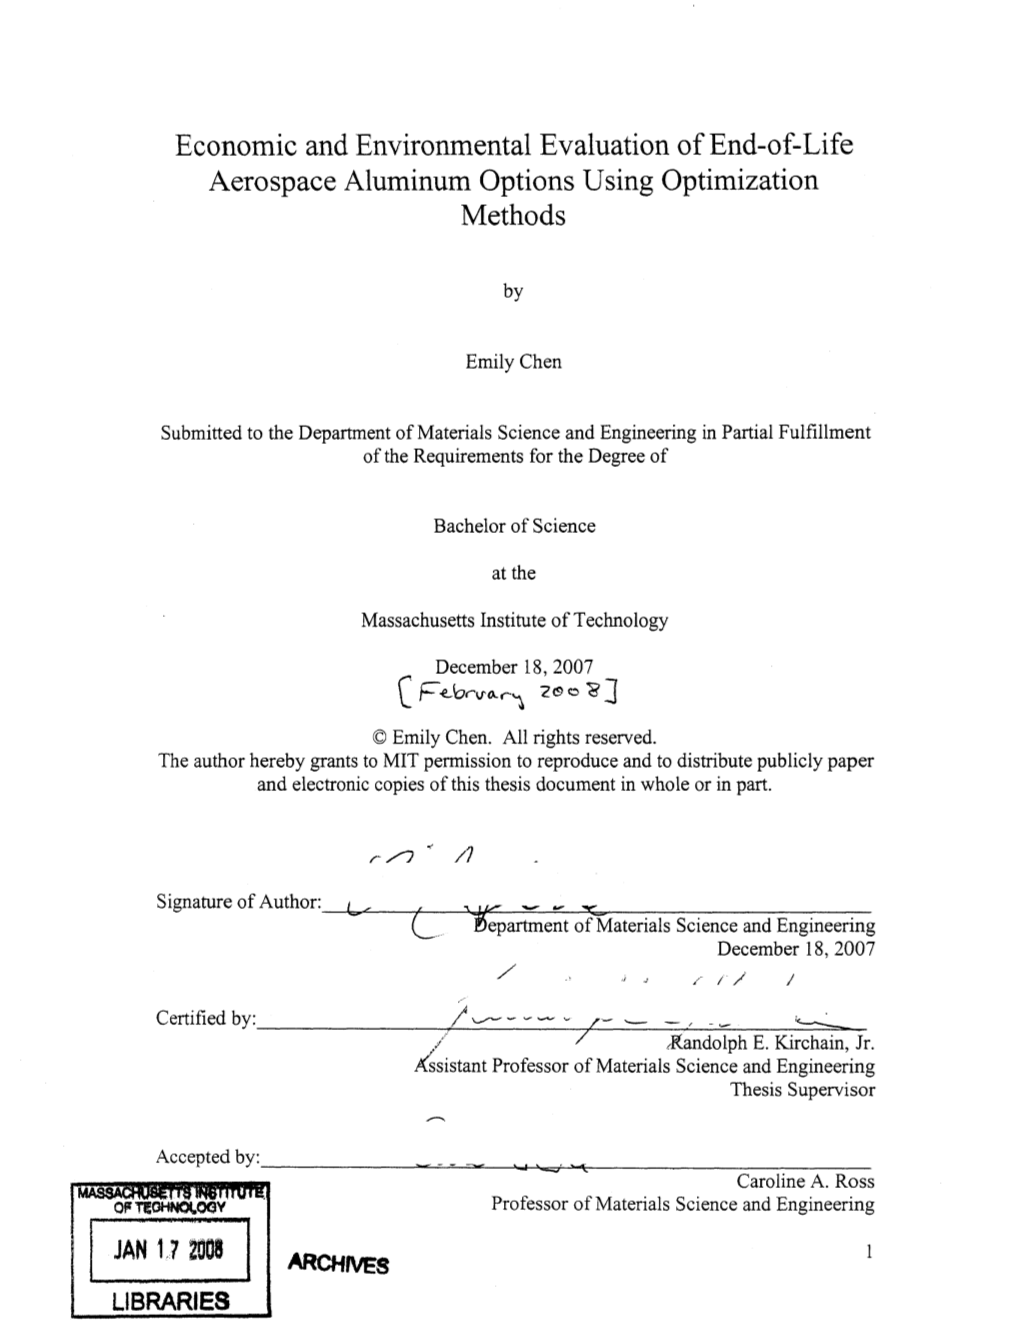 Economic and Environmental Evaluation of End-Of-Life Aerospace Aluminum Options Using Optimization Methods